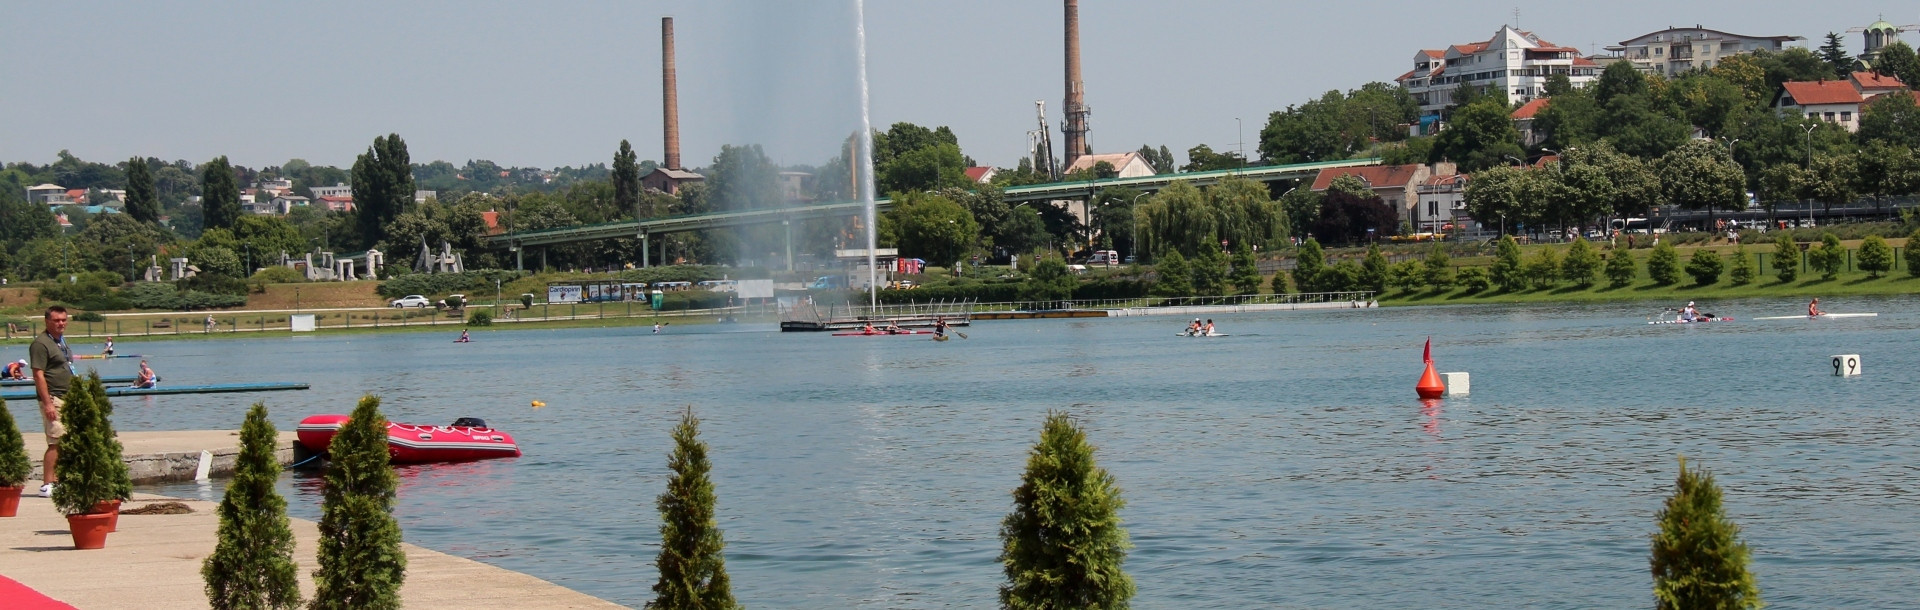 Belgrade prepares to host Canoe Sprint and Paracanoe European Championships